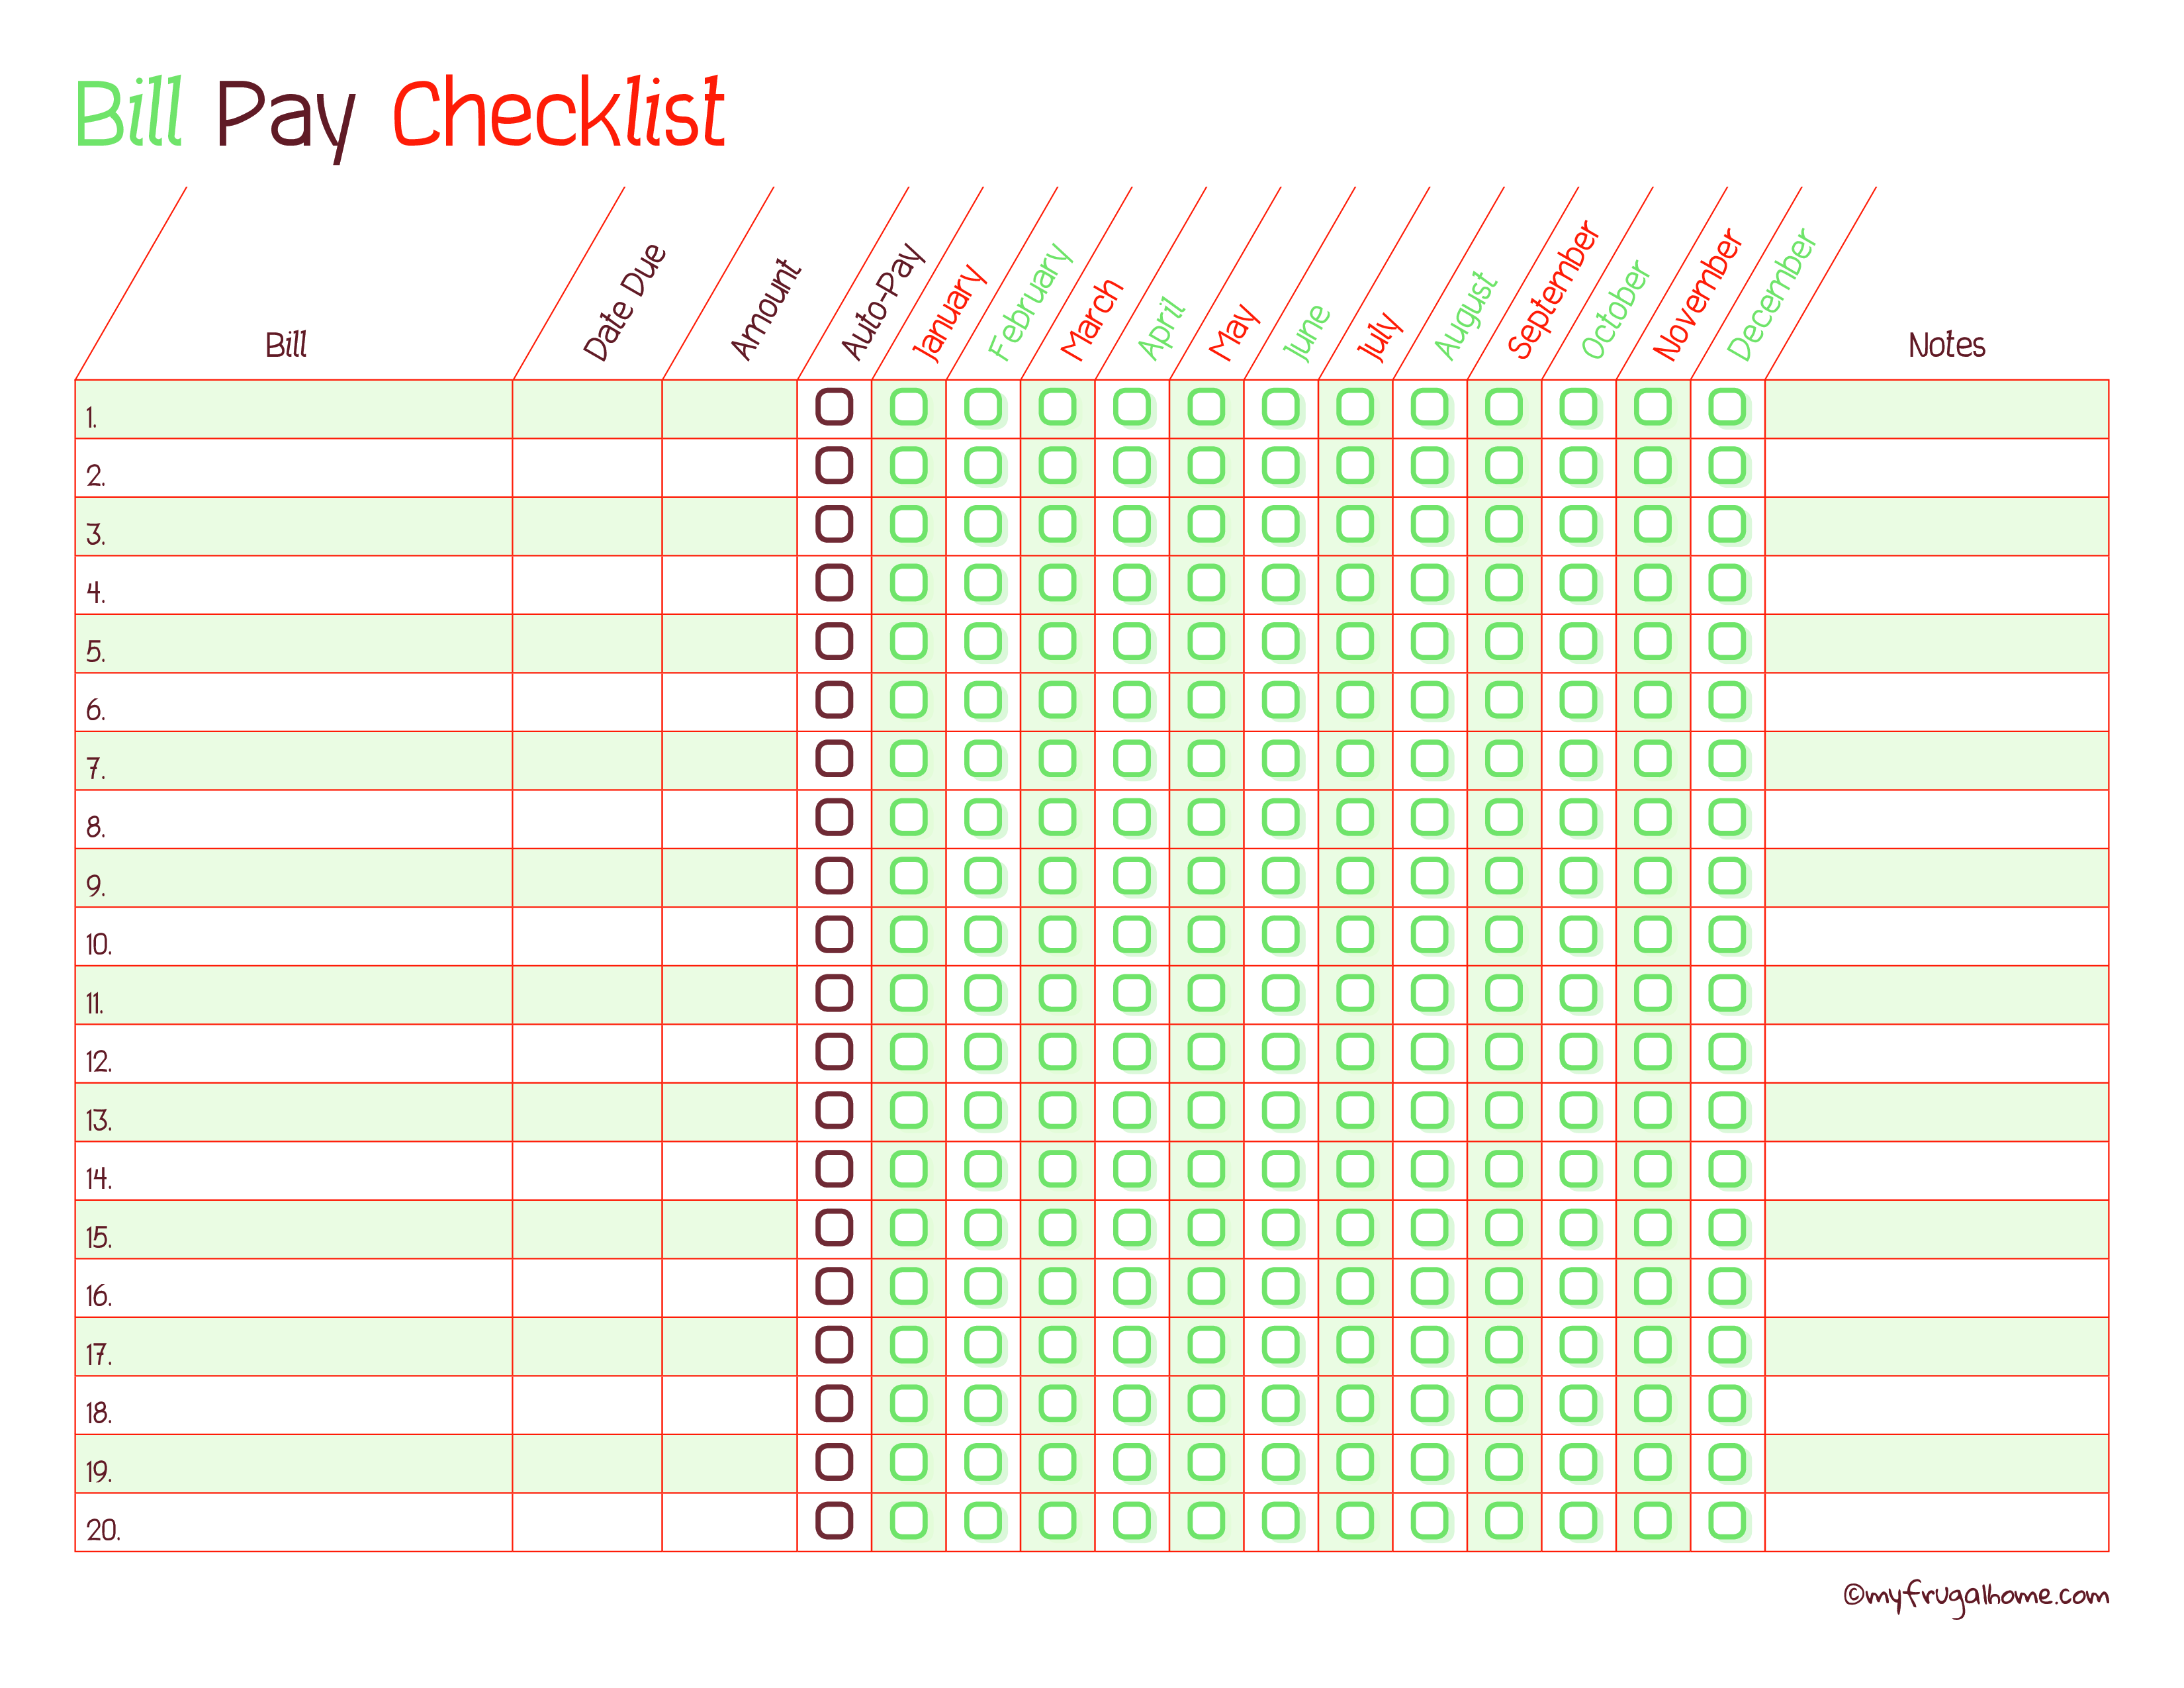 Bill Payment Checklist main image